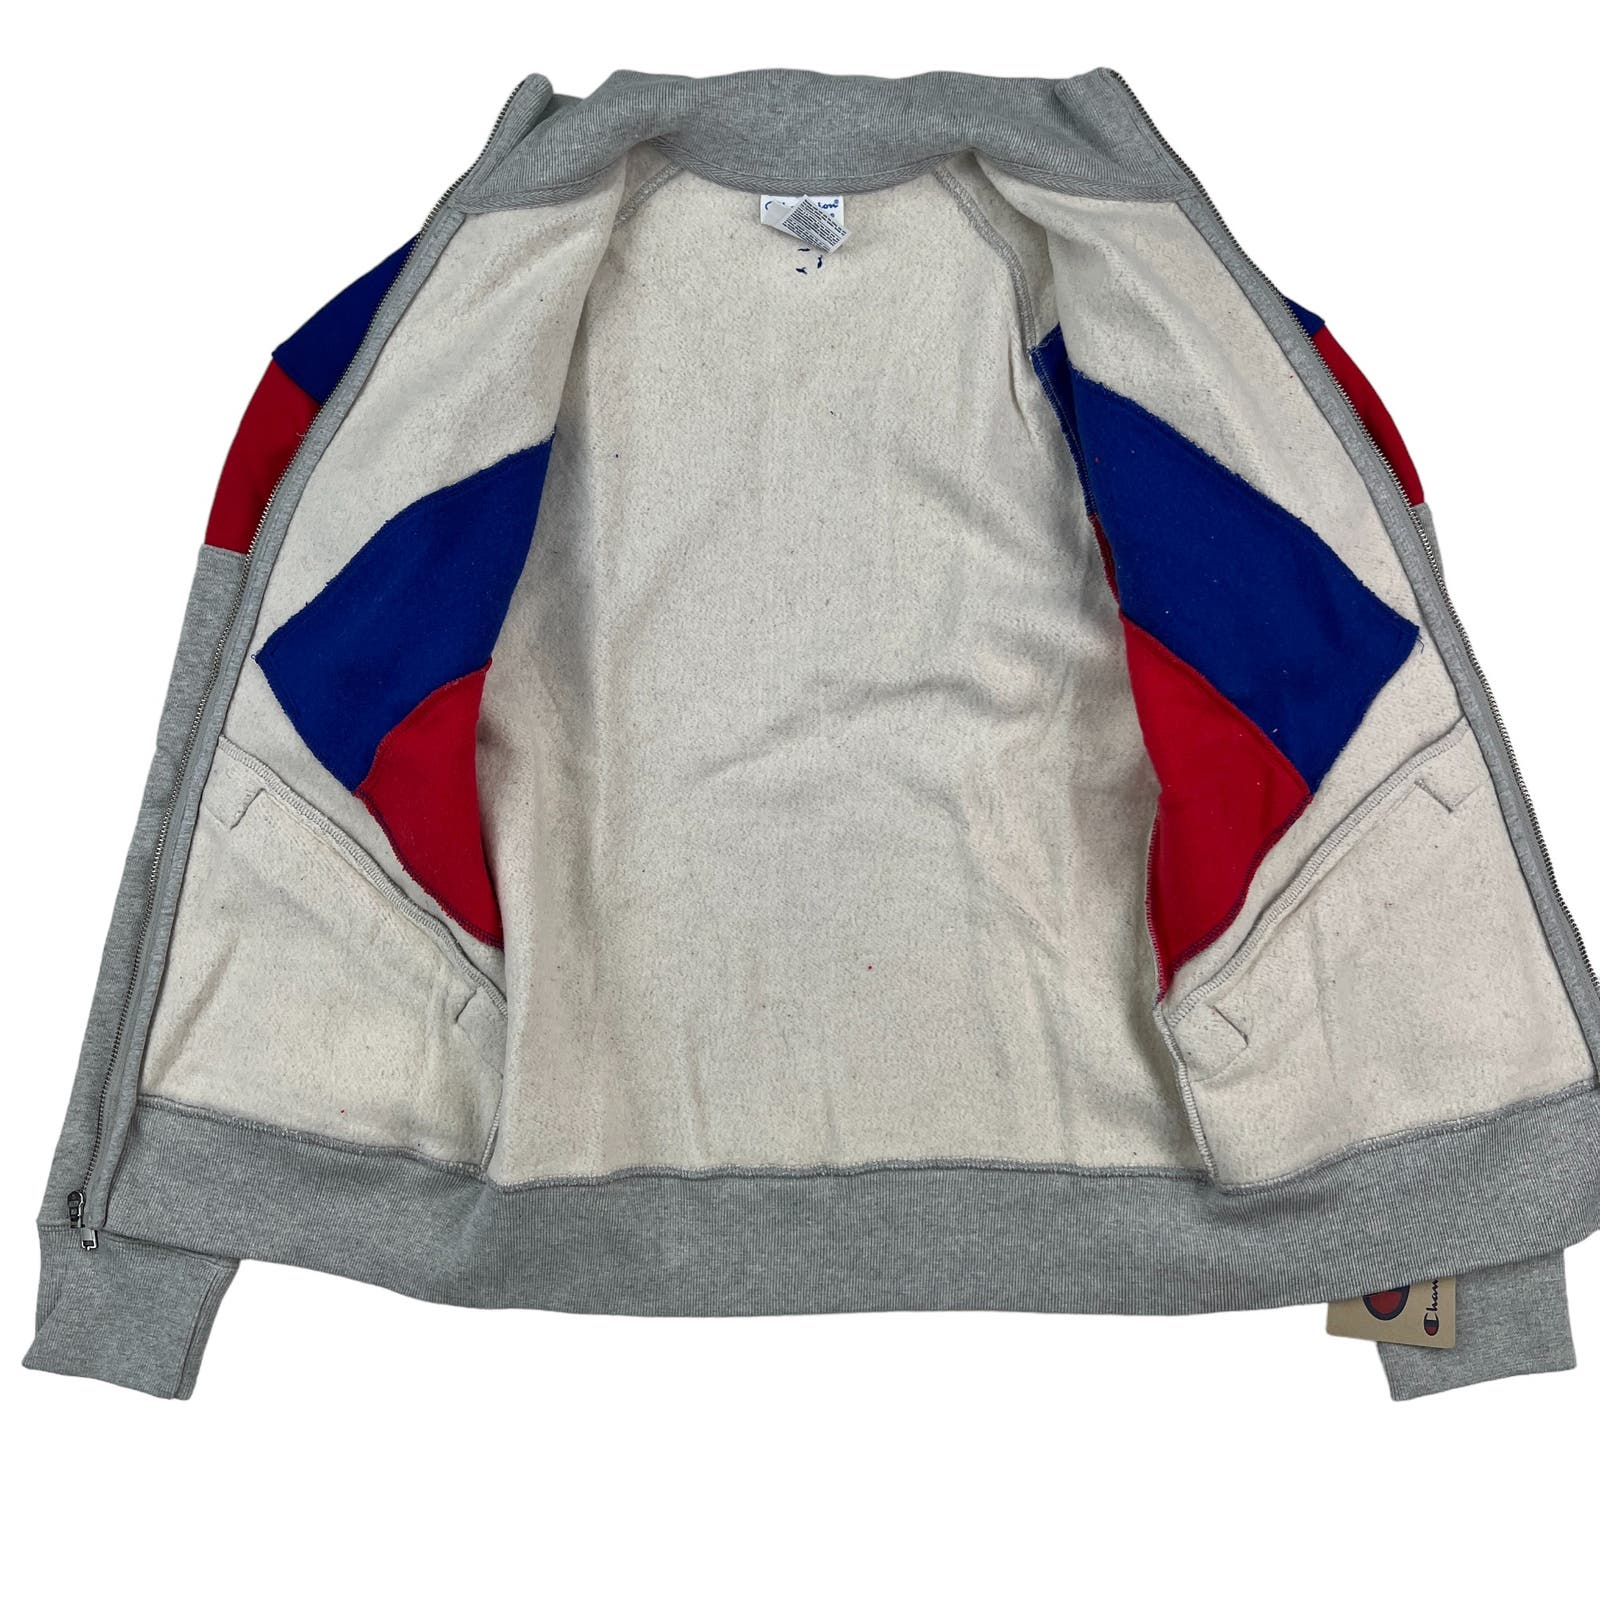 Champion Men Grey Full Zip Track Jacket US XS Reverse Weave Colorblock